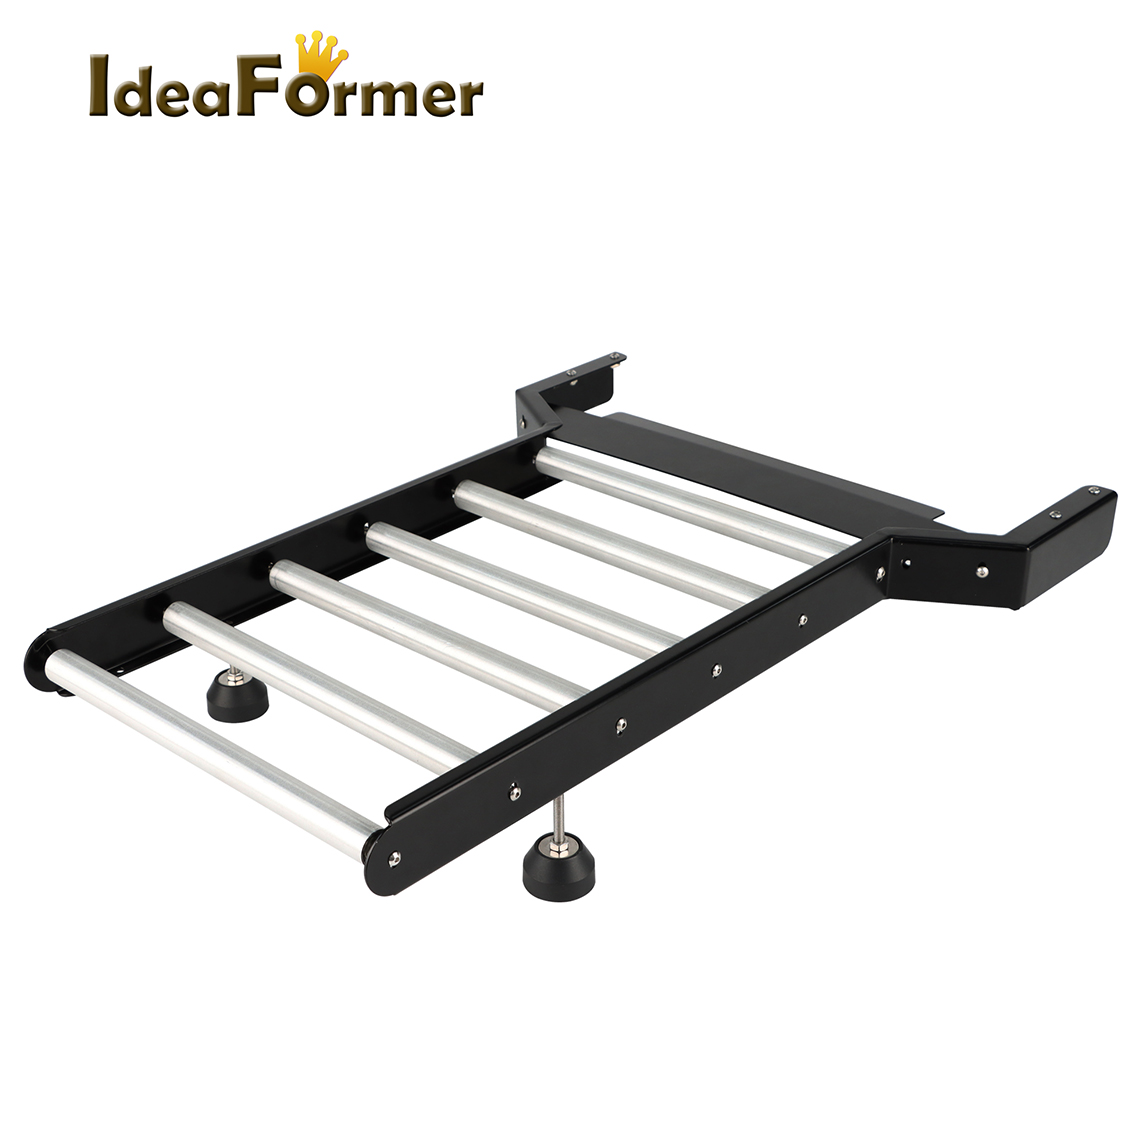 Ideaformer IR 3 Extended Support Plate for IR 3 3D Printer